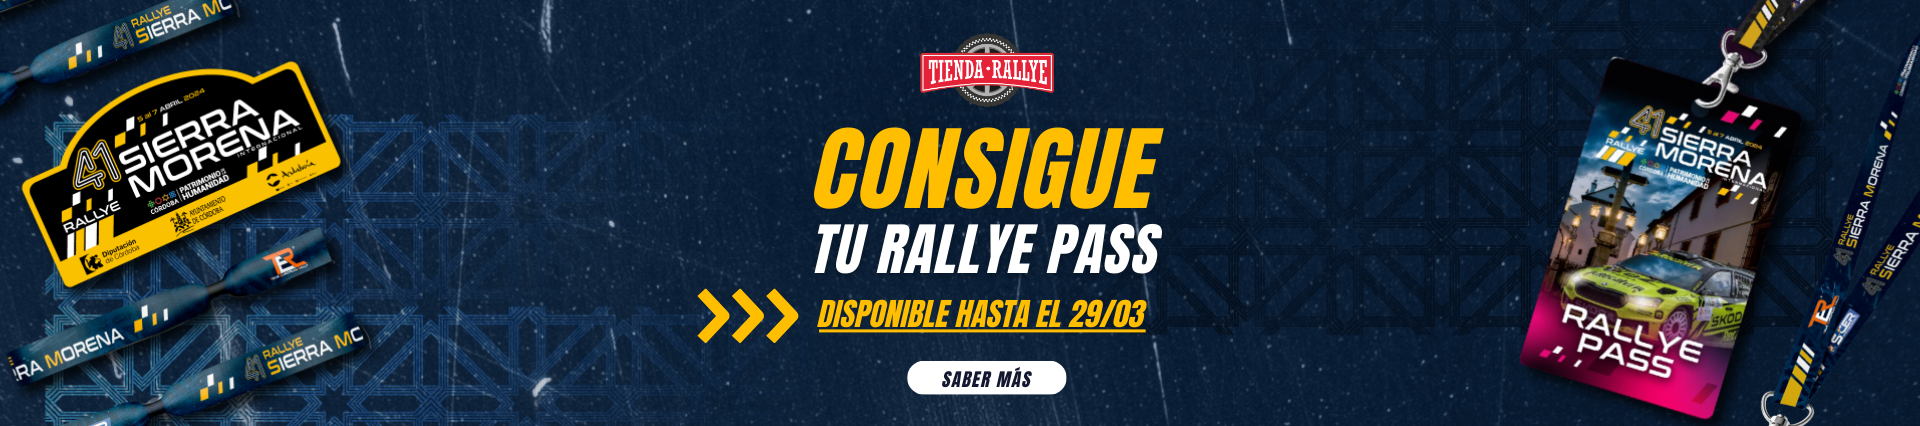 Rallye pass Sierra Morena